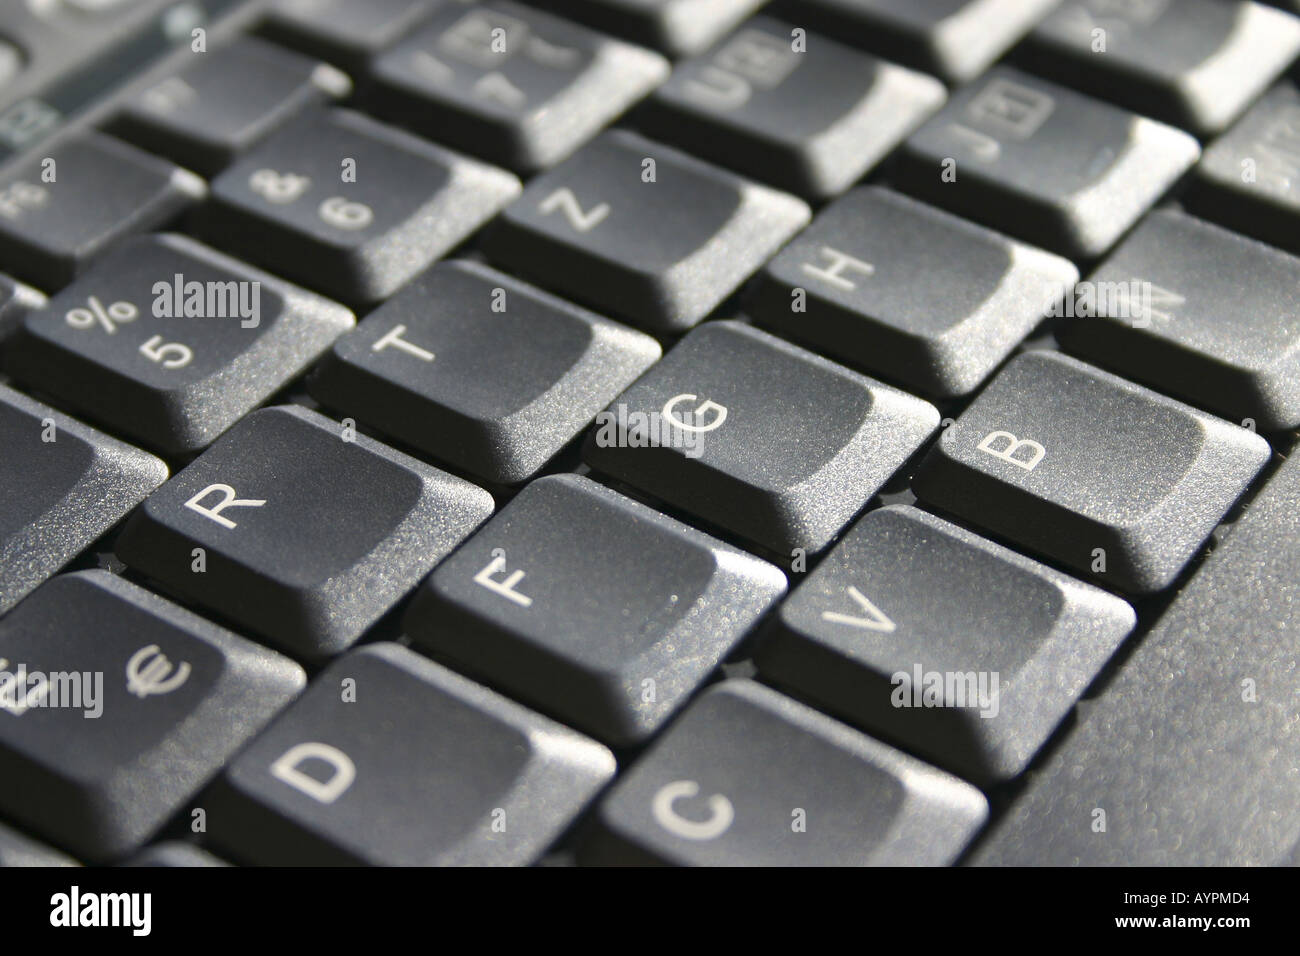 Close up of computer keys on a black keyboard Stock Photo